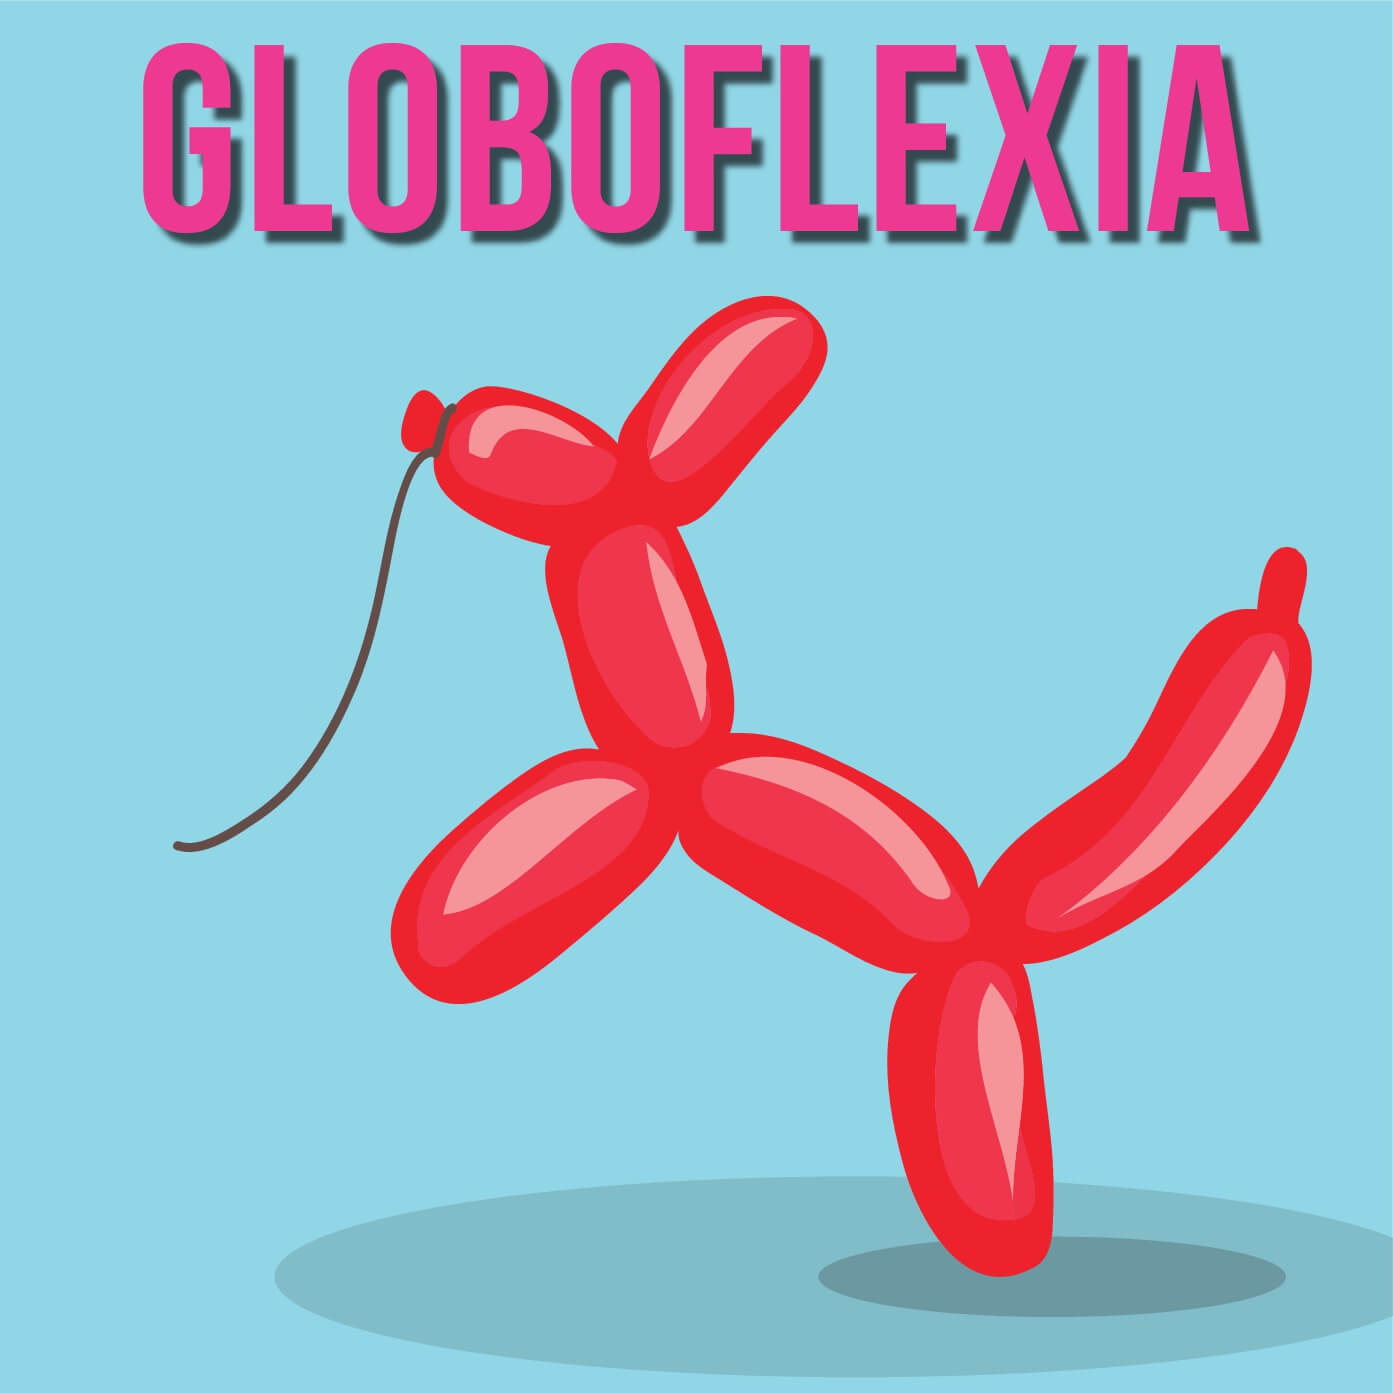 Globoflexia